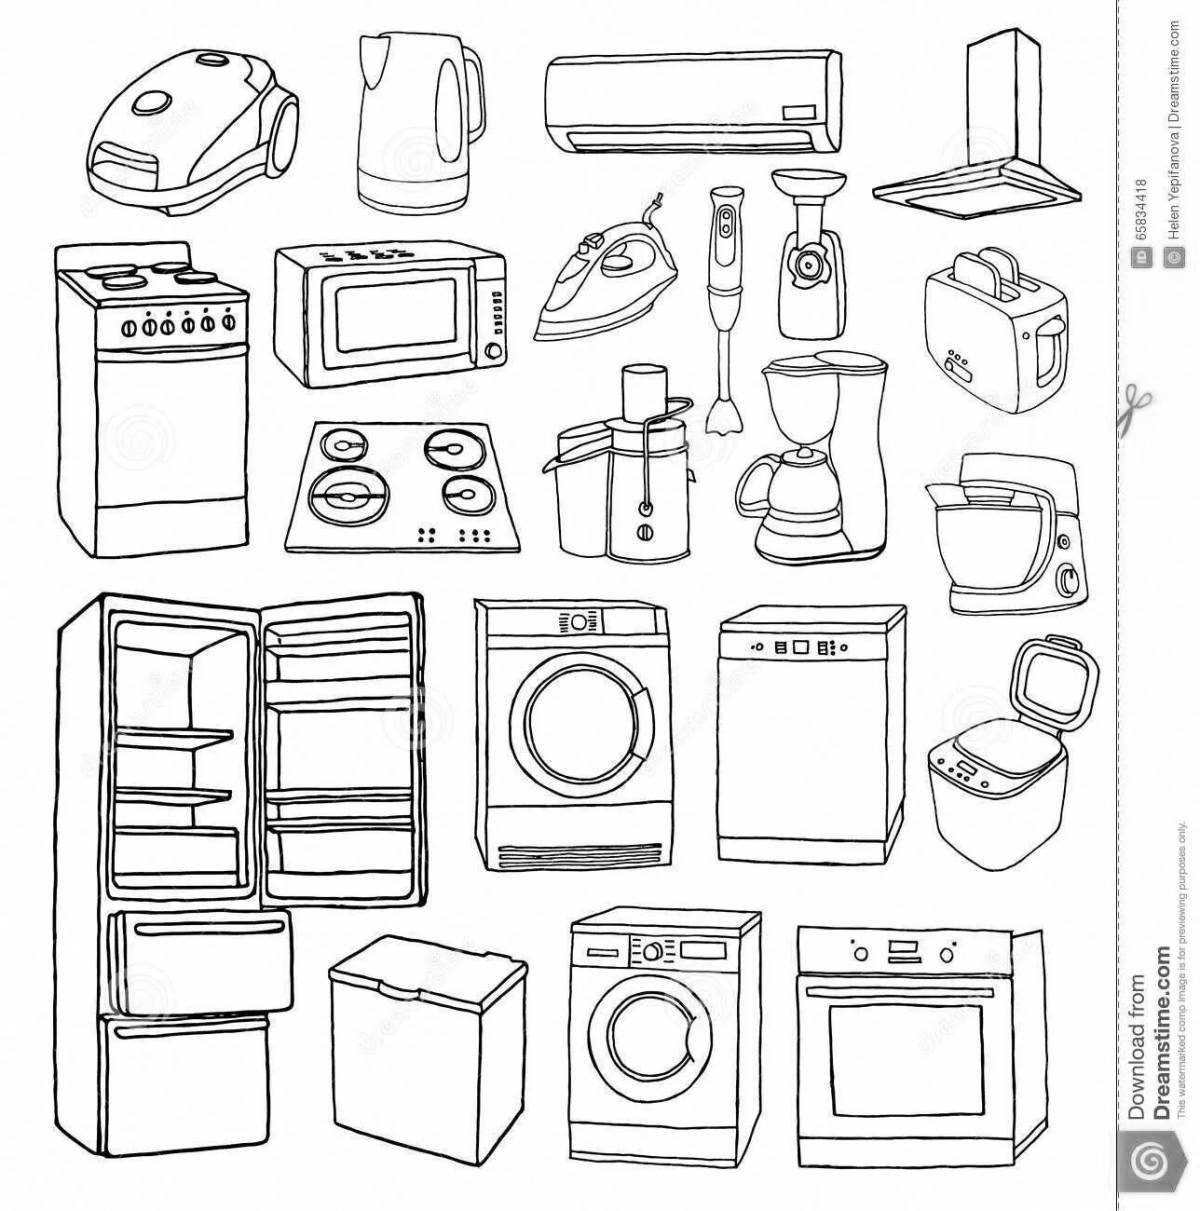 Children's electrical appliances #4